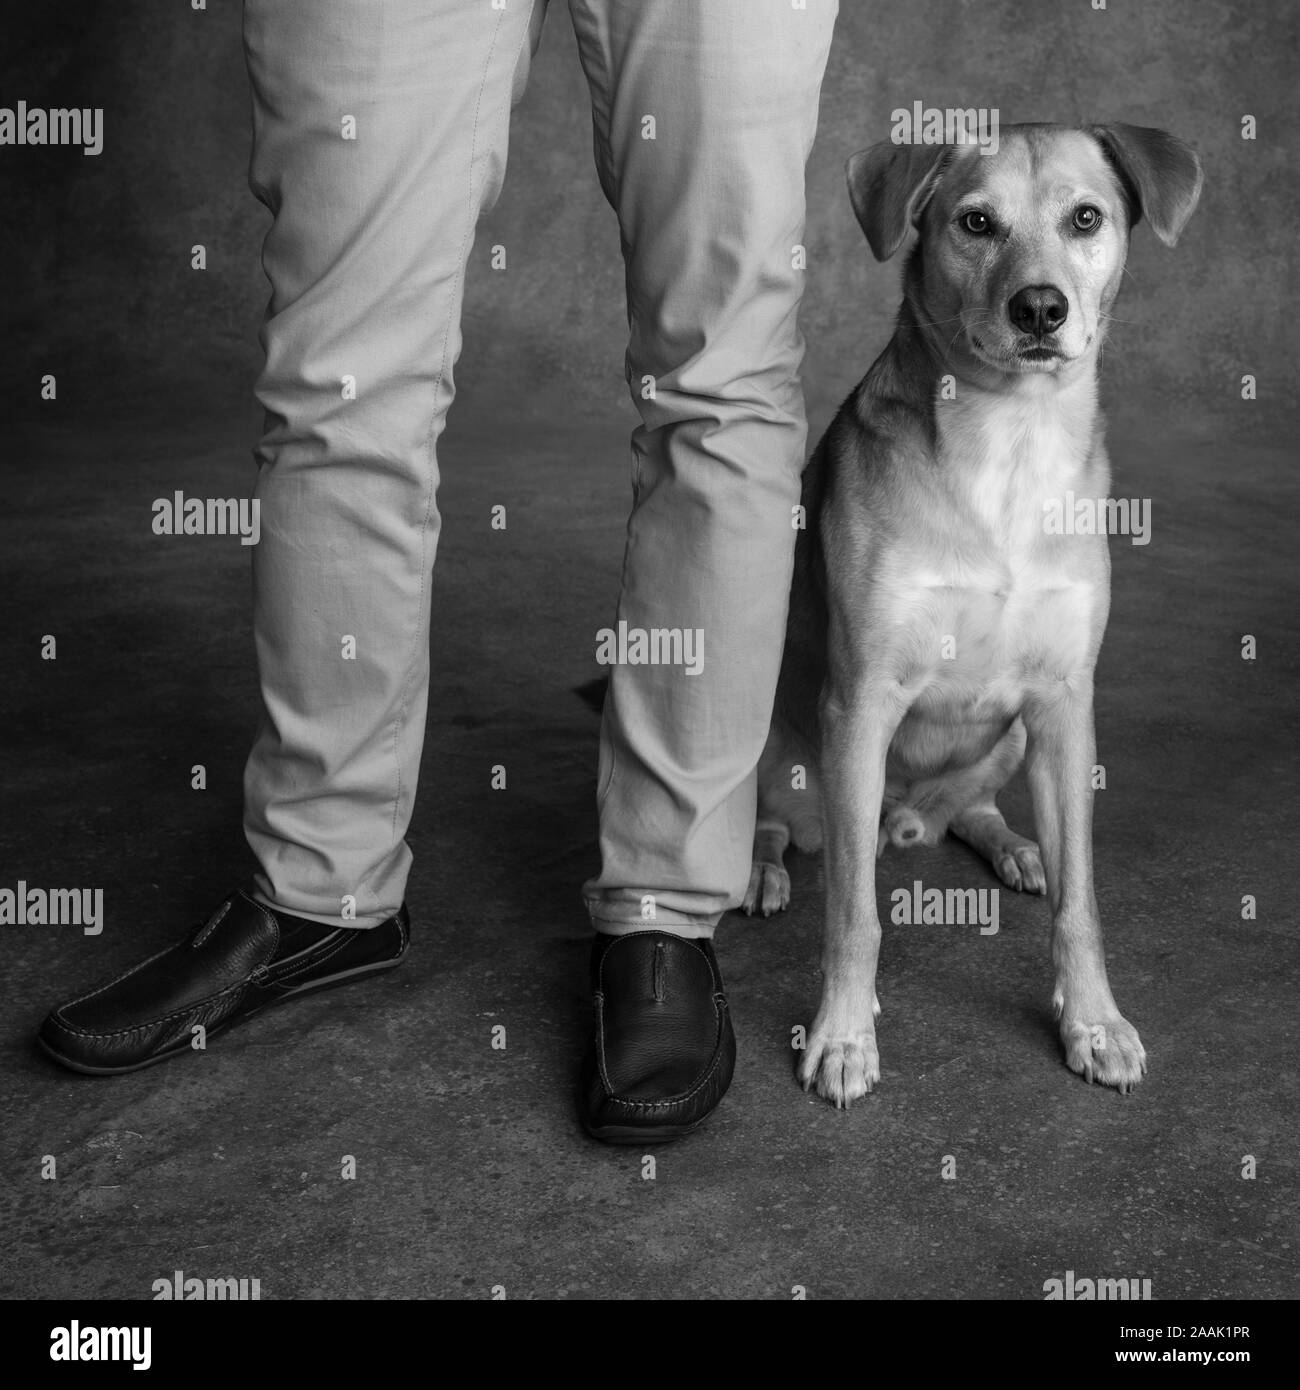 Man standing next to dog Stock Photo